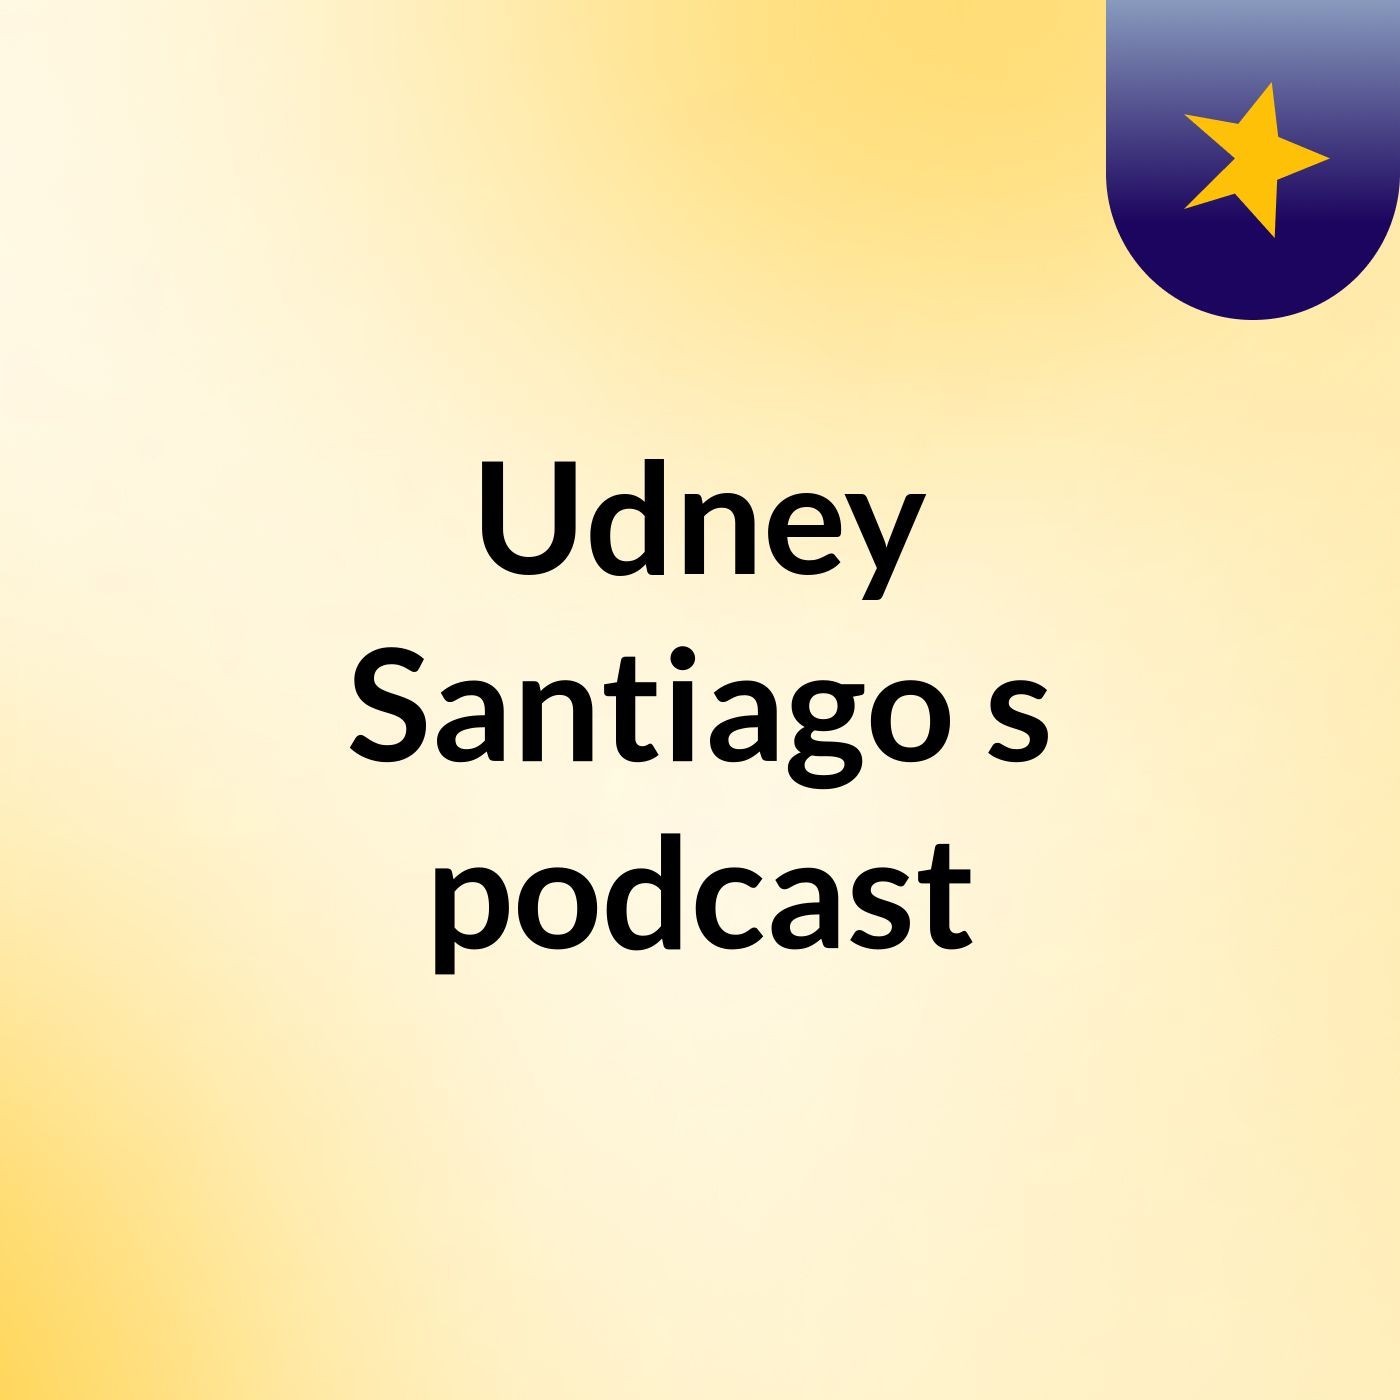 Episódio 9 - Udney Santiago's podcast